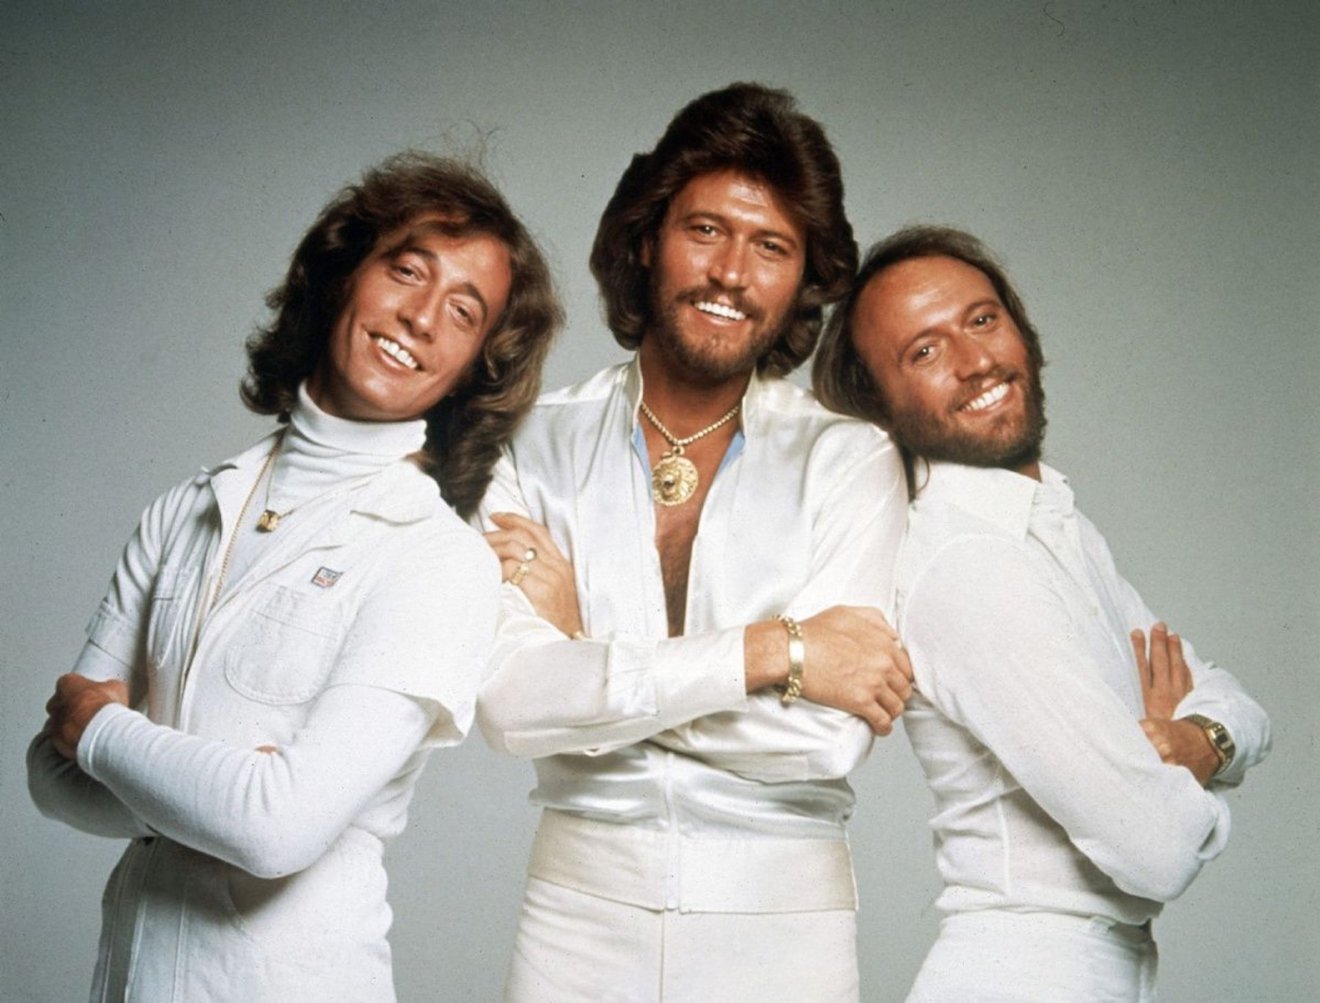 “How Deep Is Your Love” บทเพลงรักลึกซึ้งจาก Bee Gees ที่เป็นกรณีศึกษาเรื่องลิขสิทธิ์ดนตรี